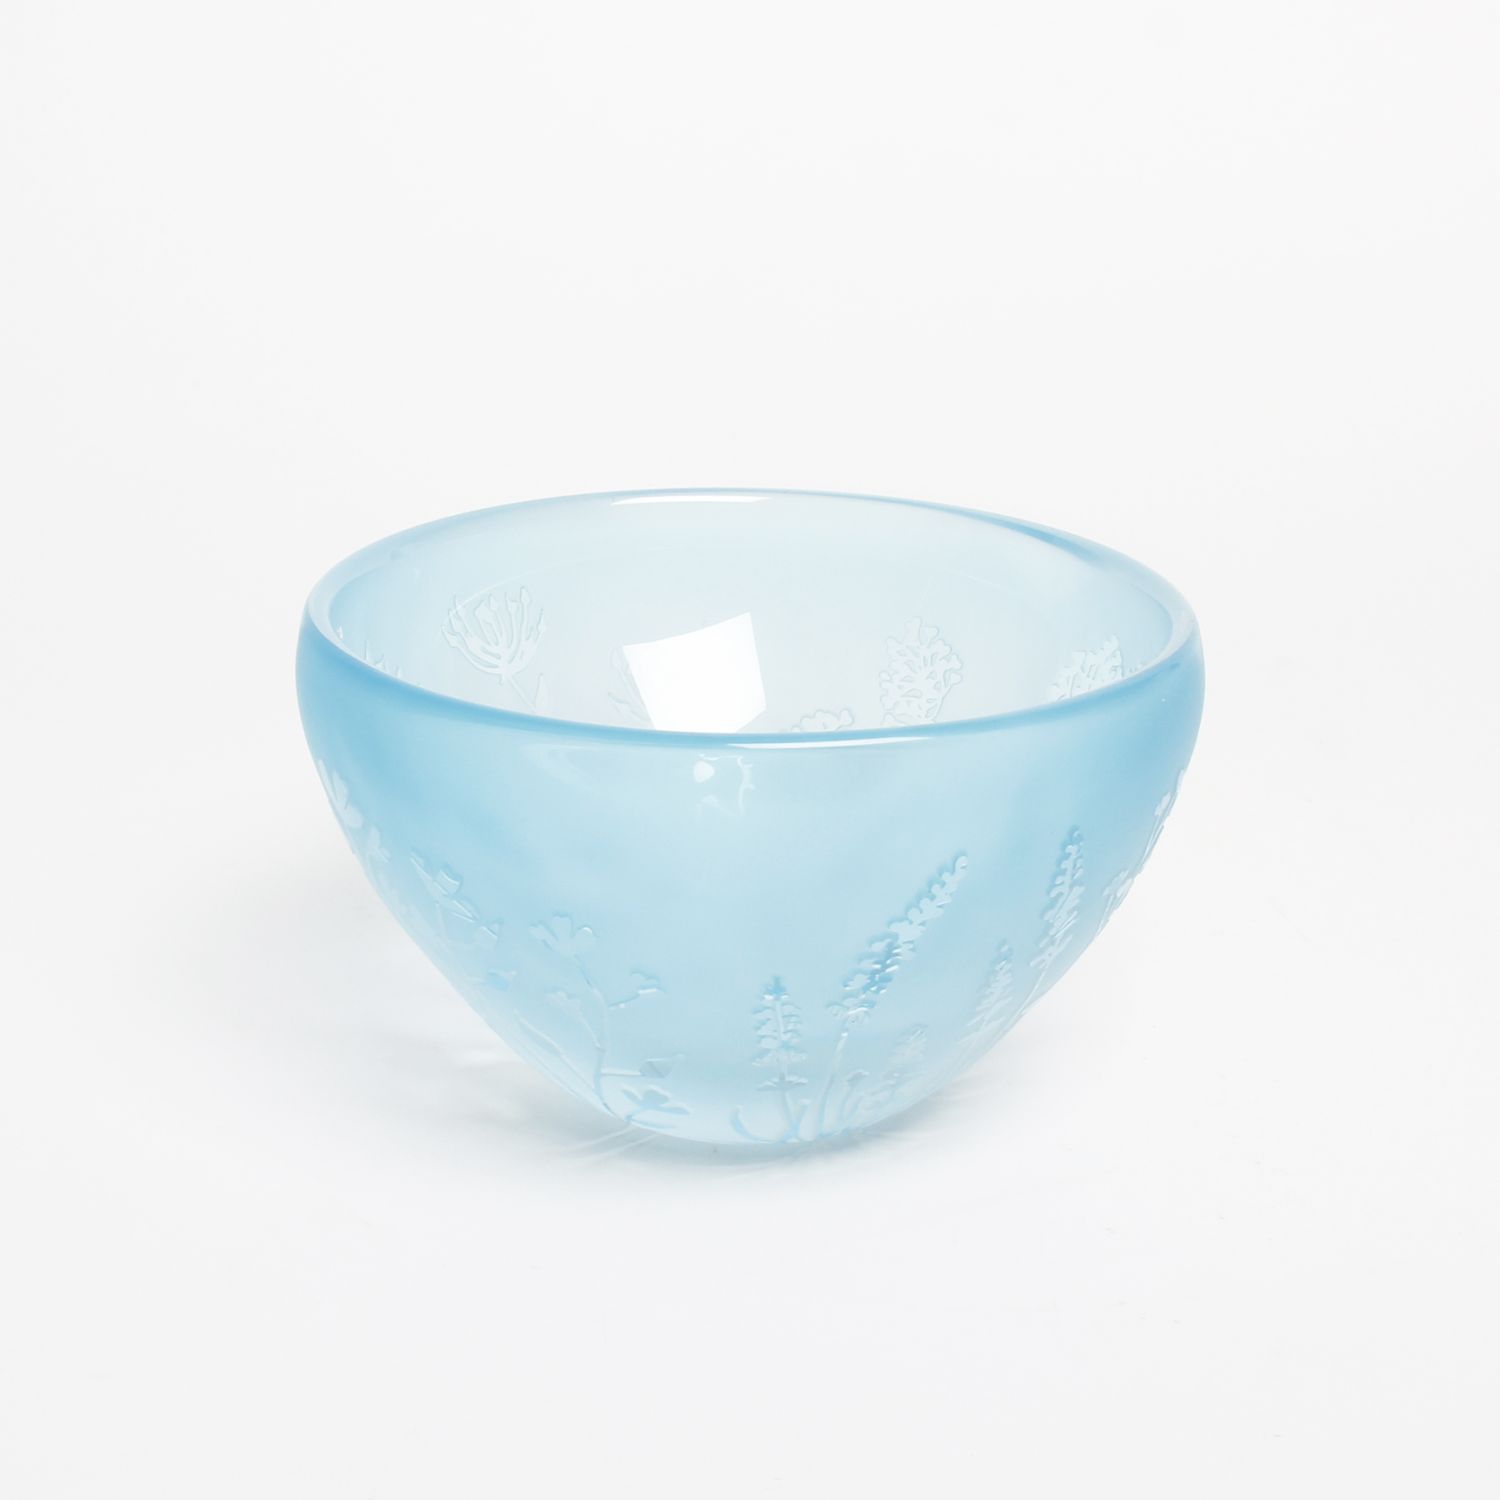 Carol Nesbitt: Big Blue Bowl Glass Product Image 1 of 1